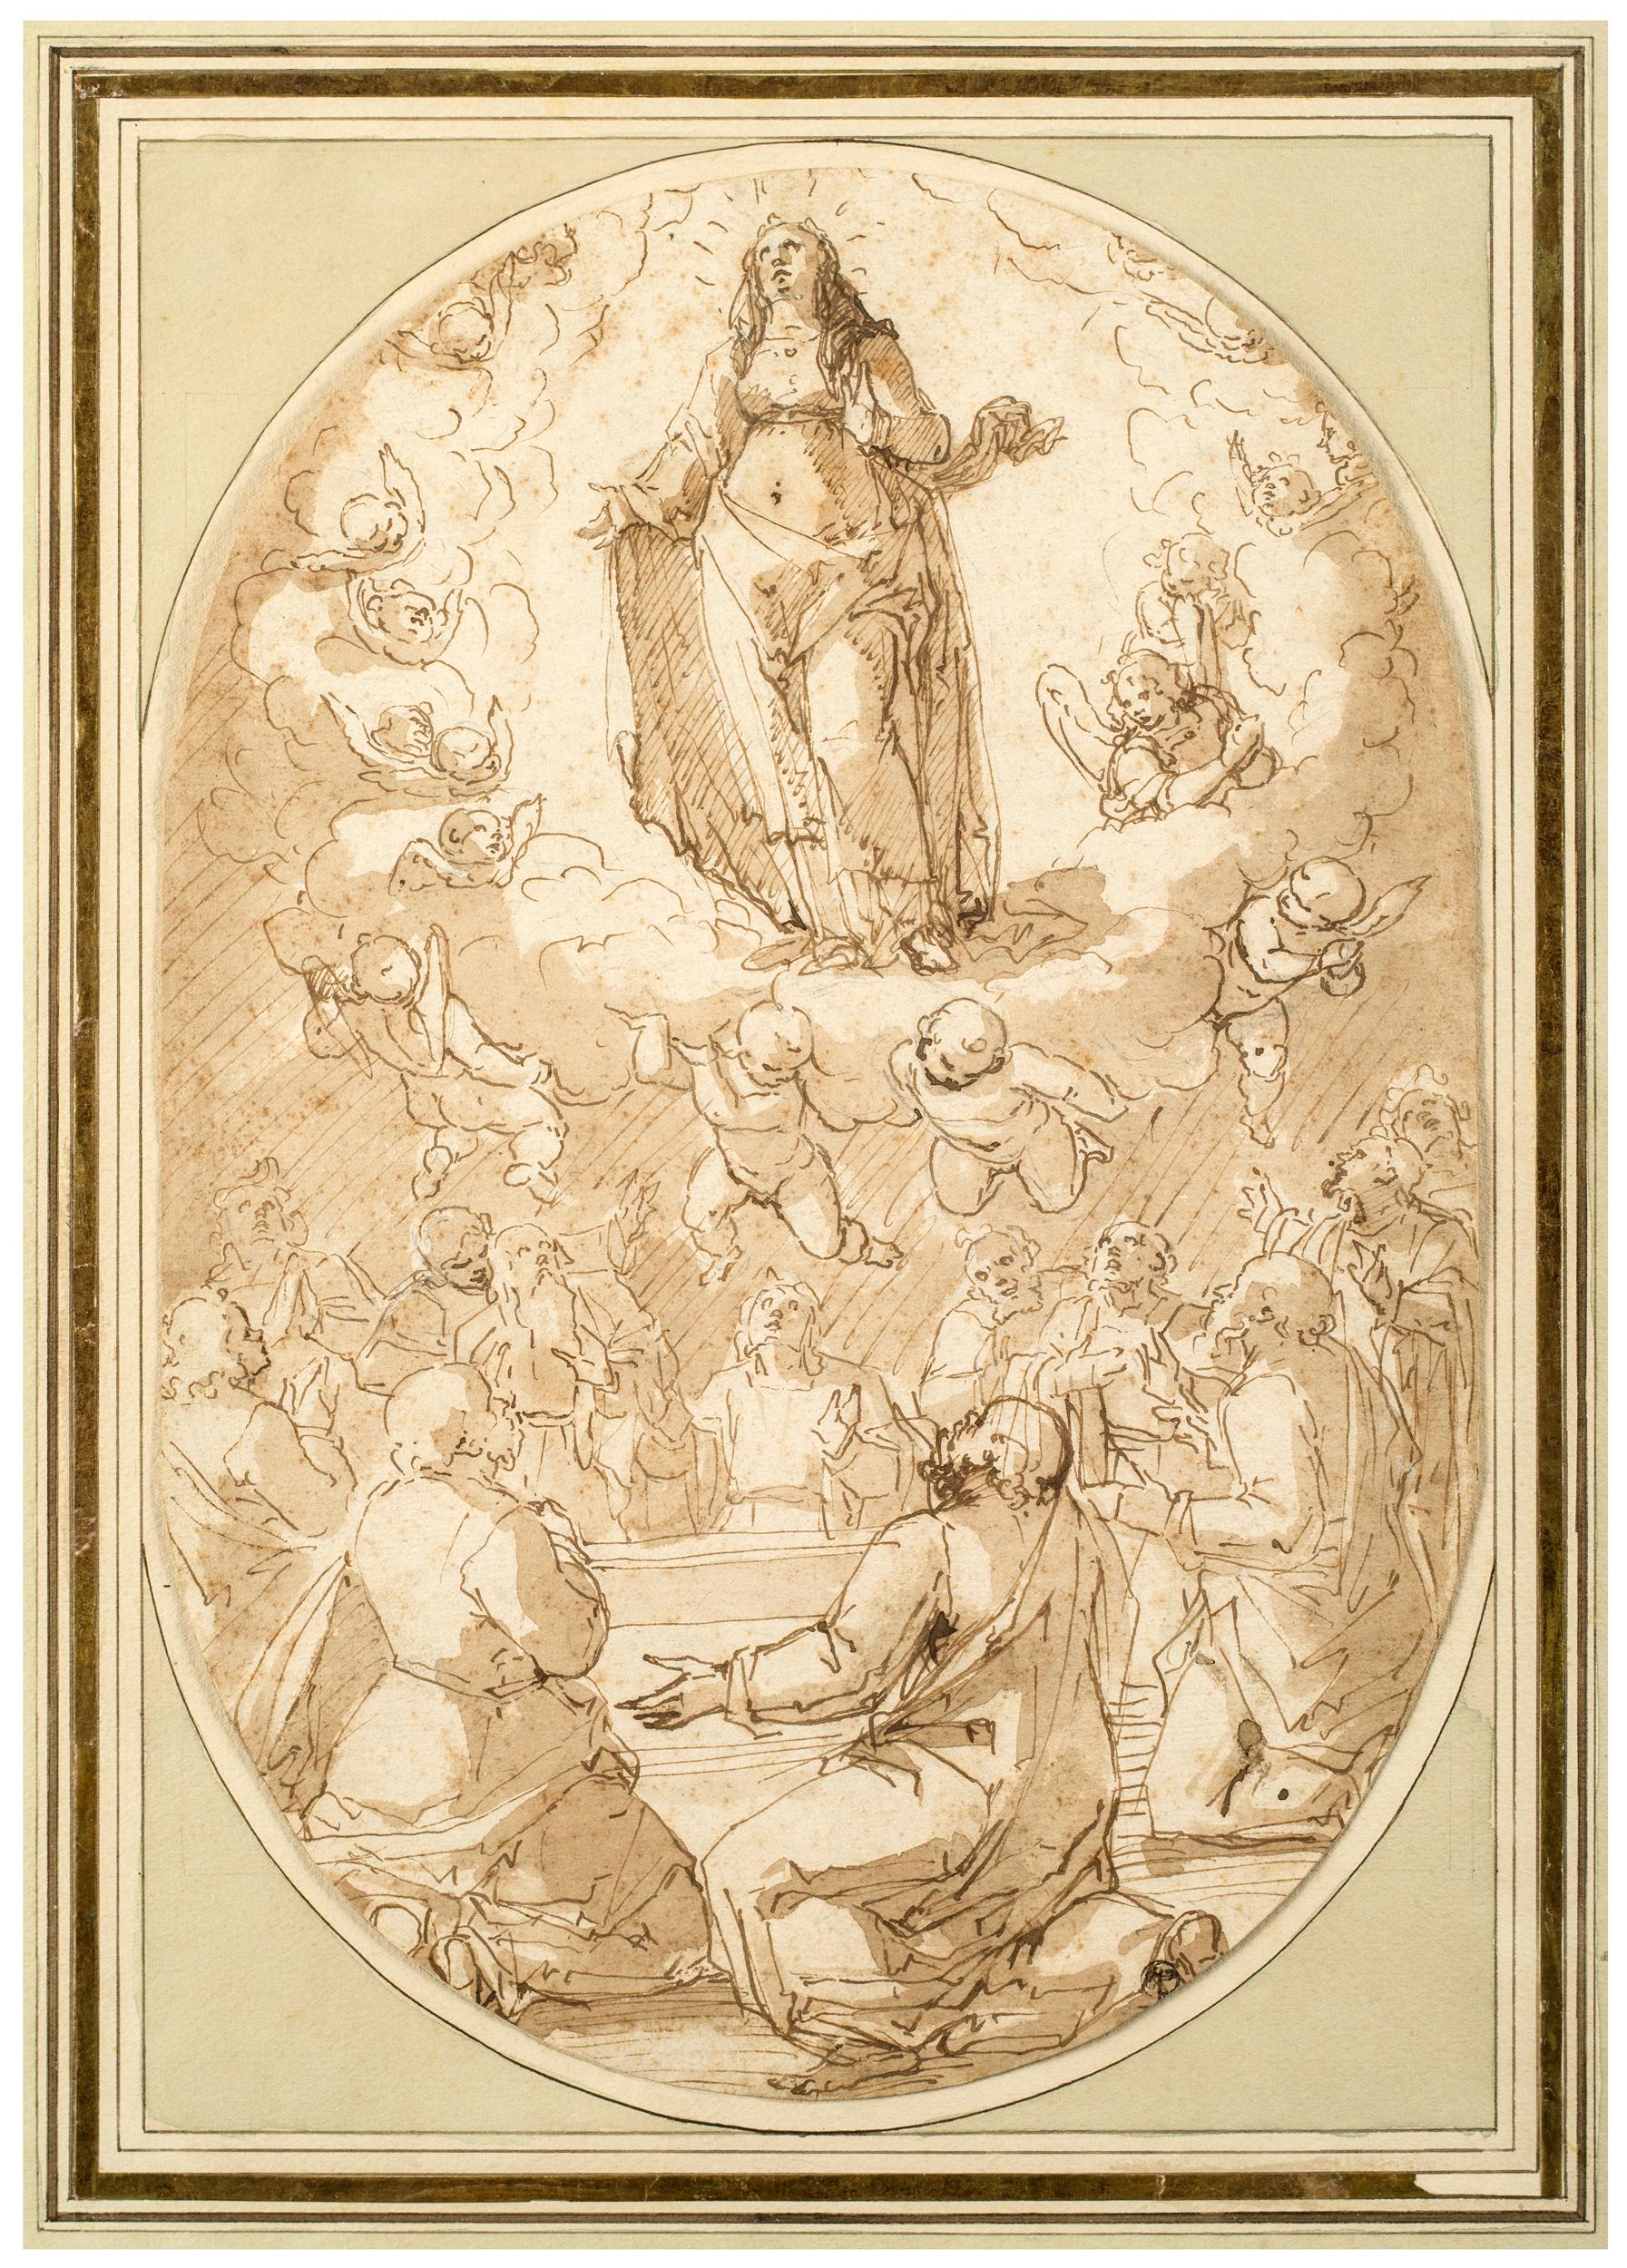 Giovanni Battista Paggi Figurative Art - The Assumption of the Virgin